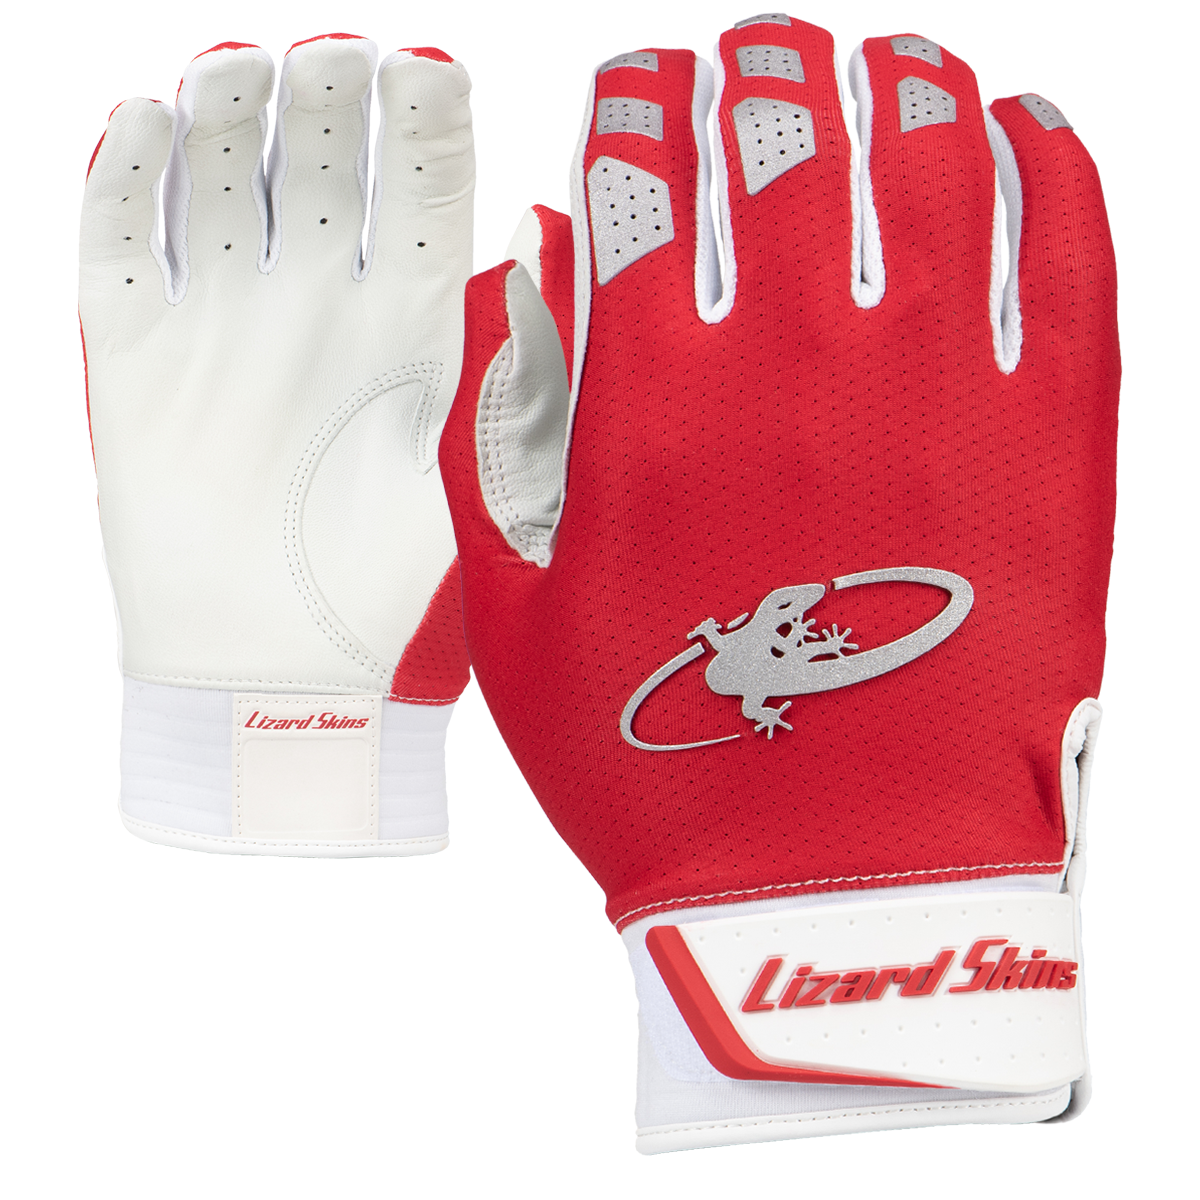 Lizard Skins Komodo V2 Batting Glove - Crimson Red